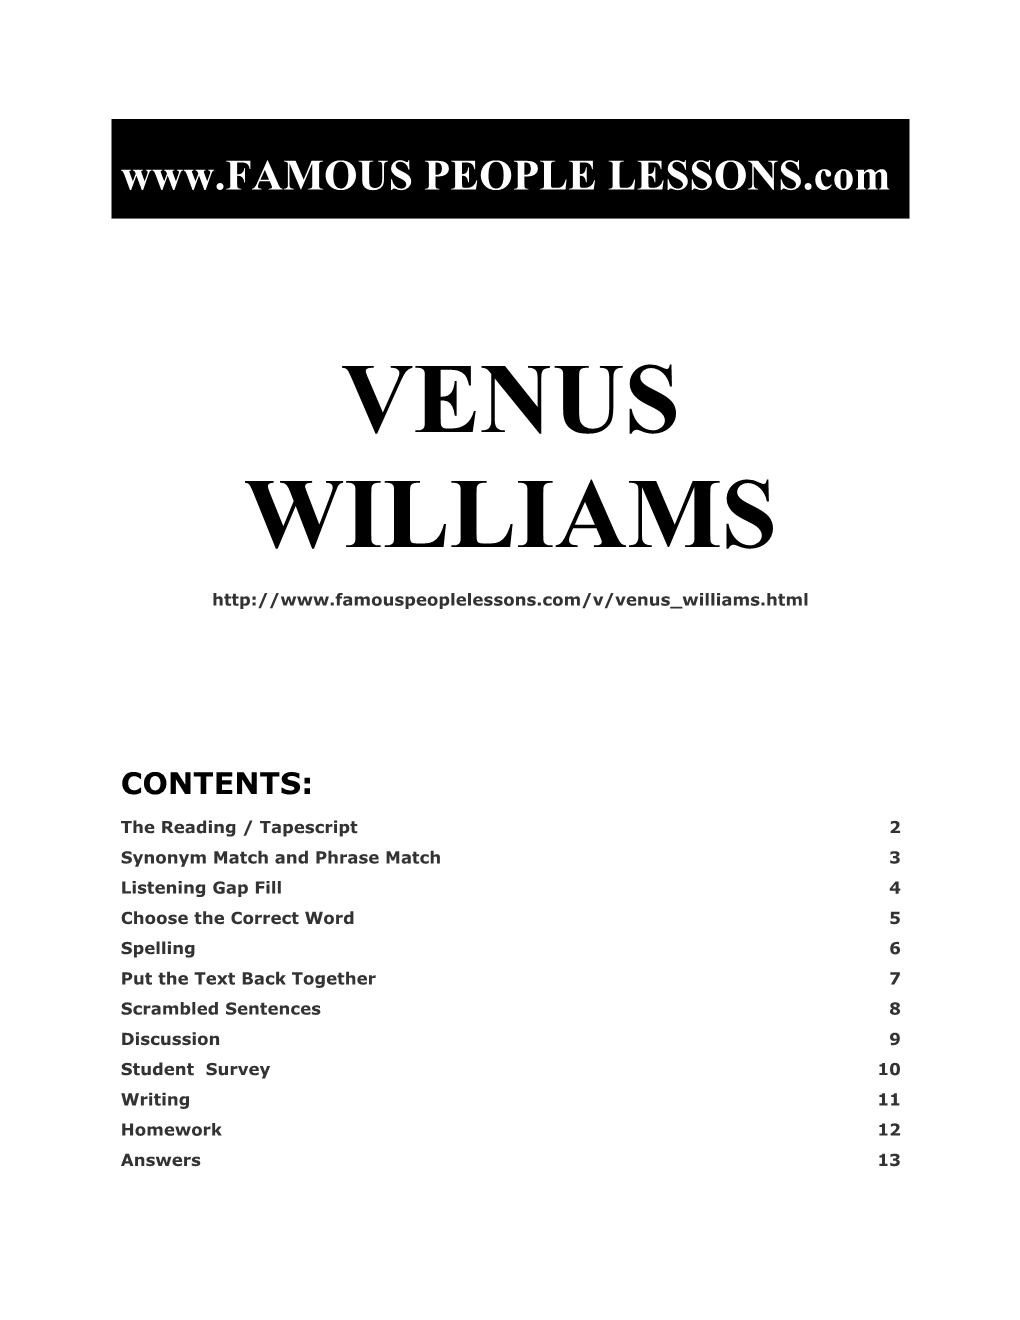 Famous People Lessons - Venus Williams